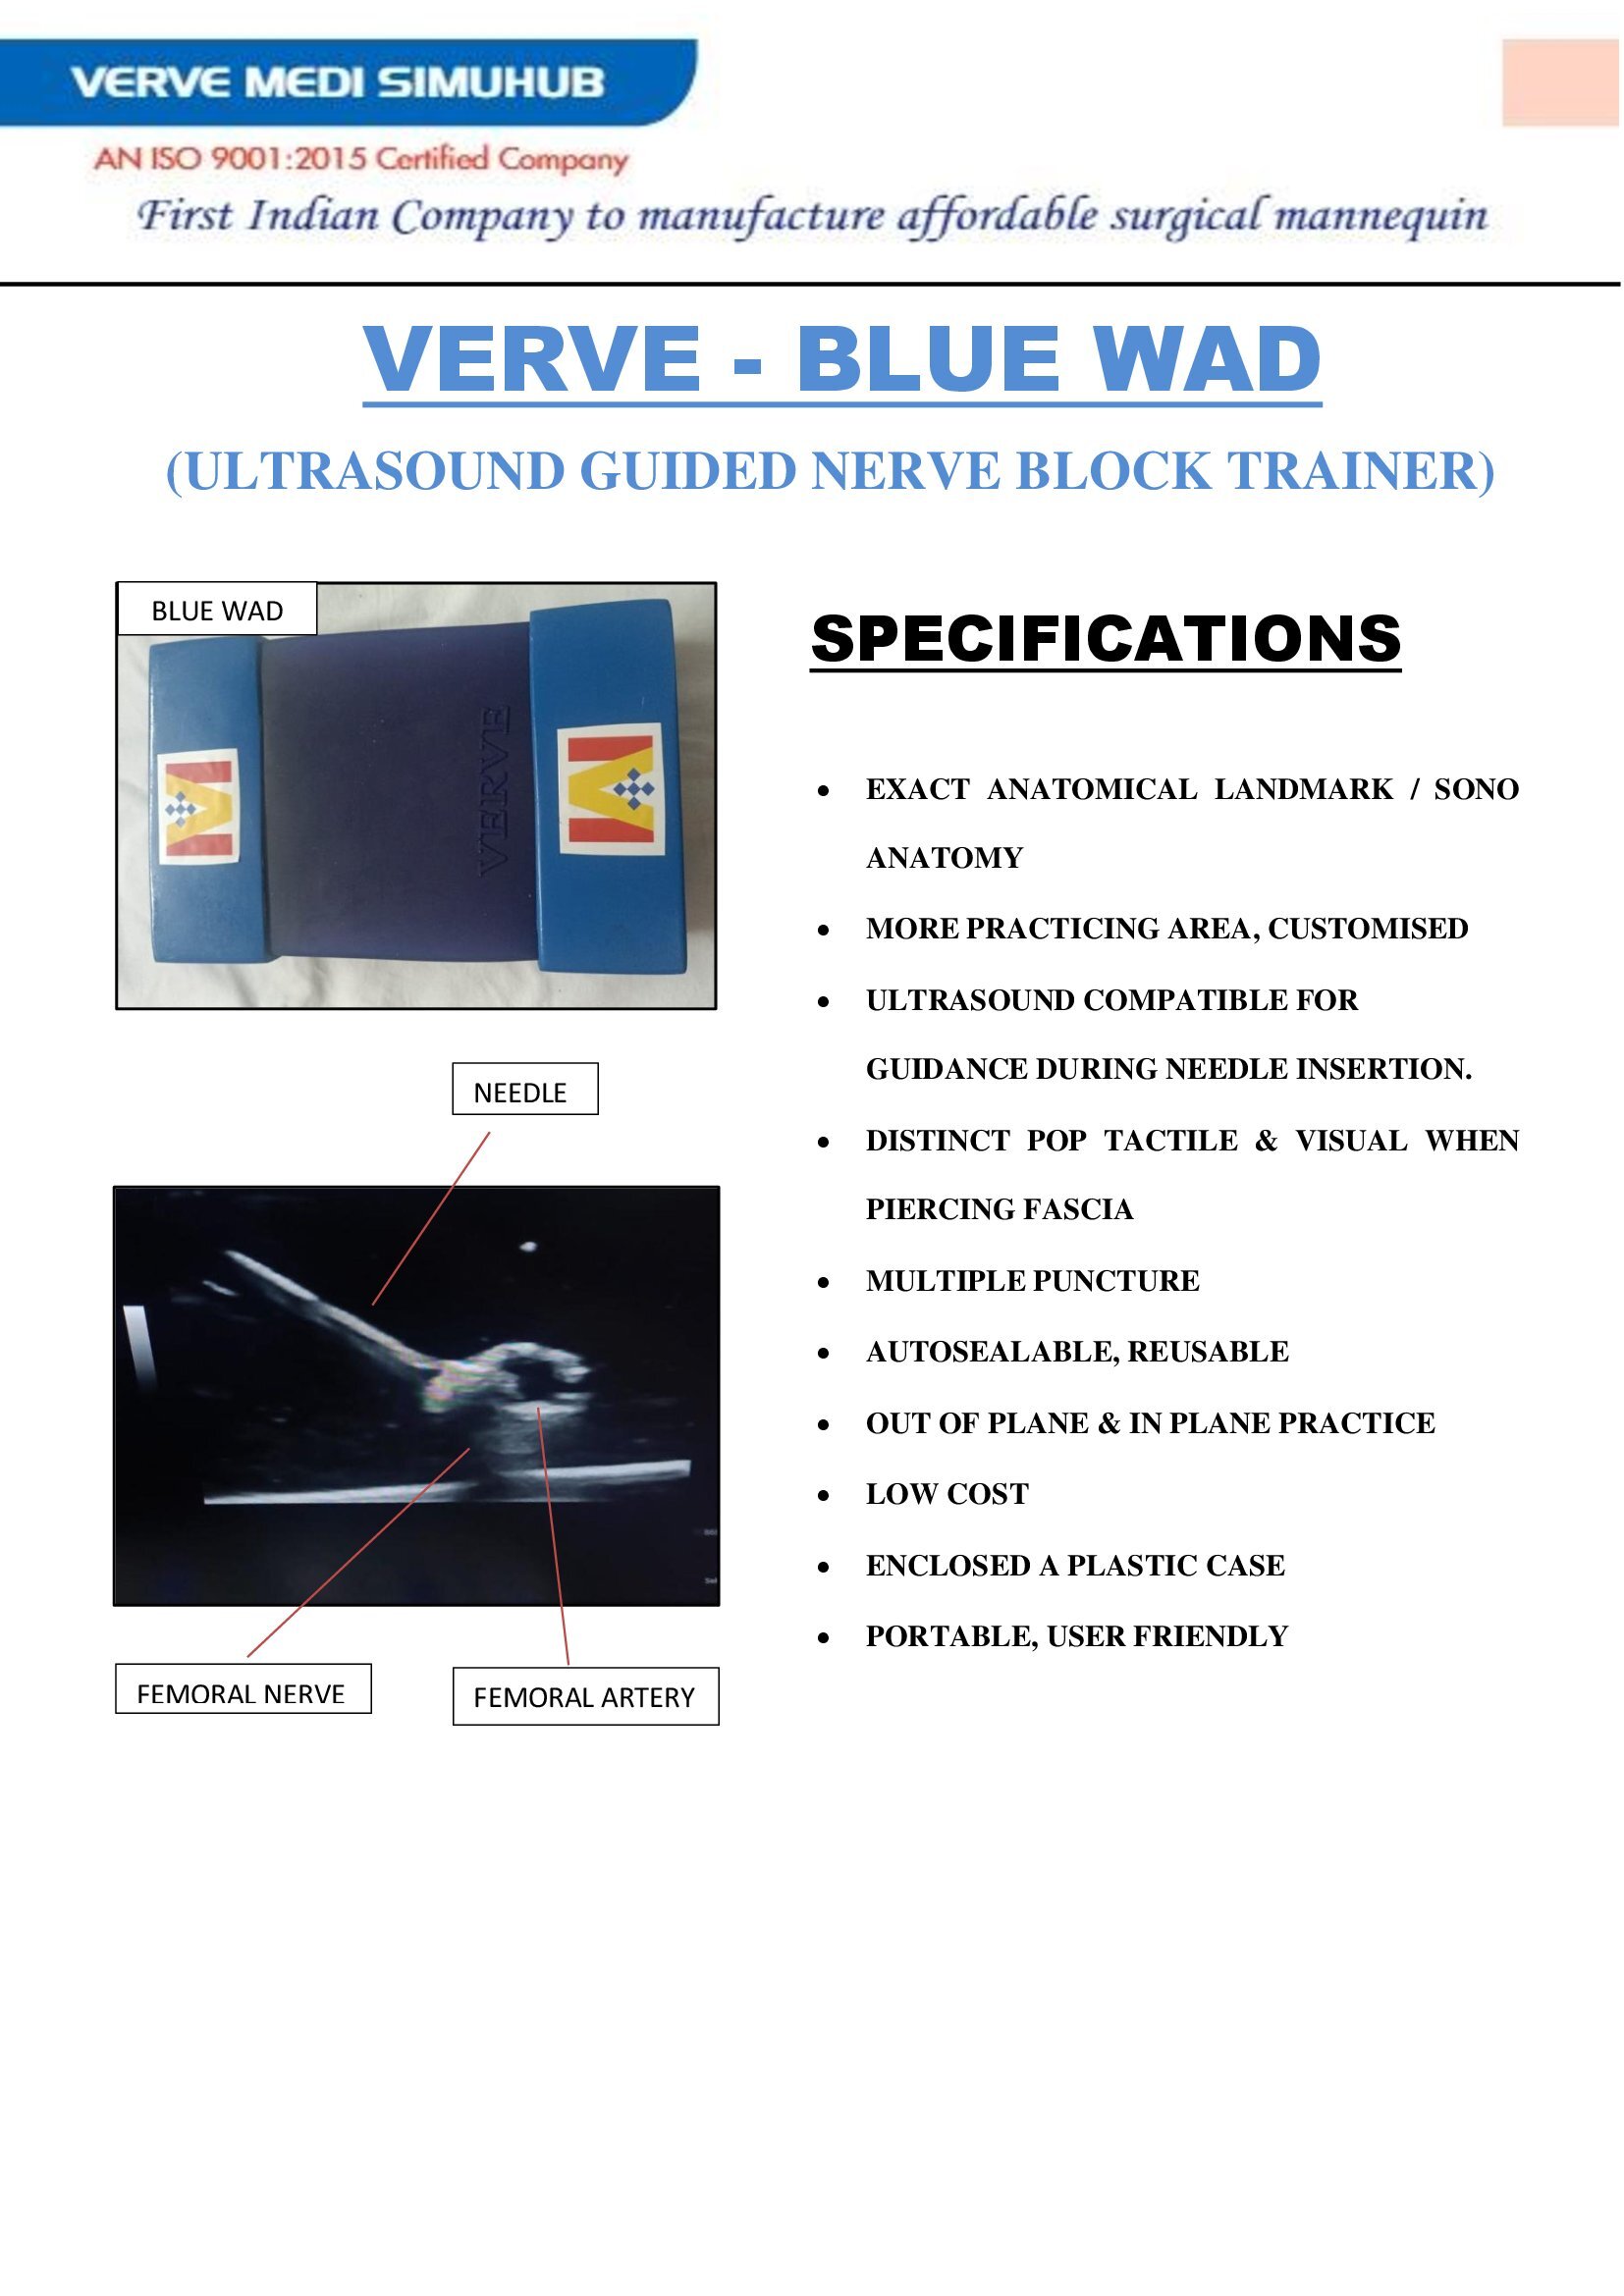 Verve - Blue Wad